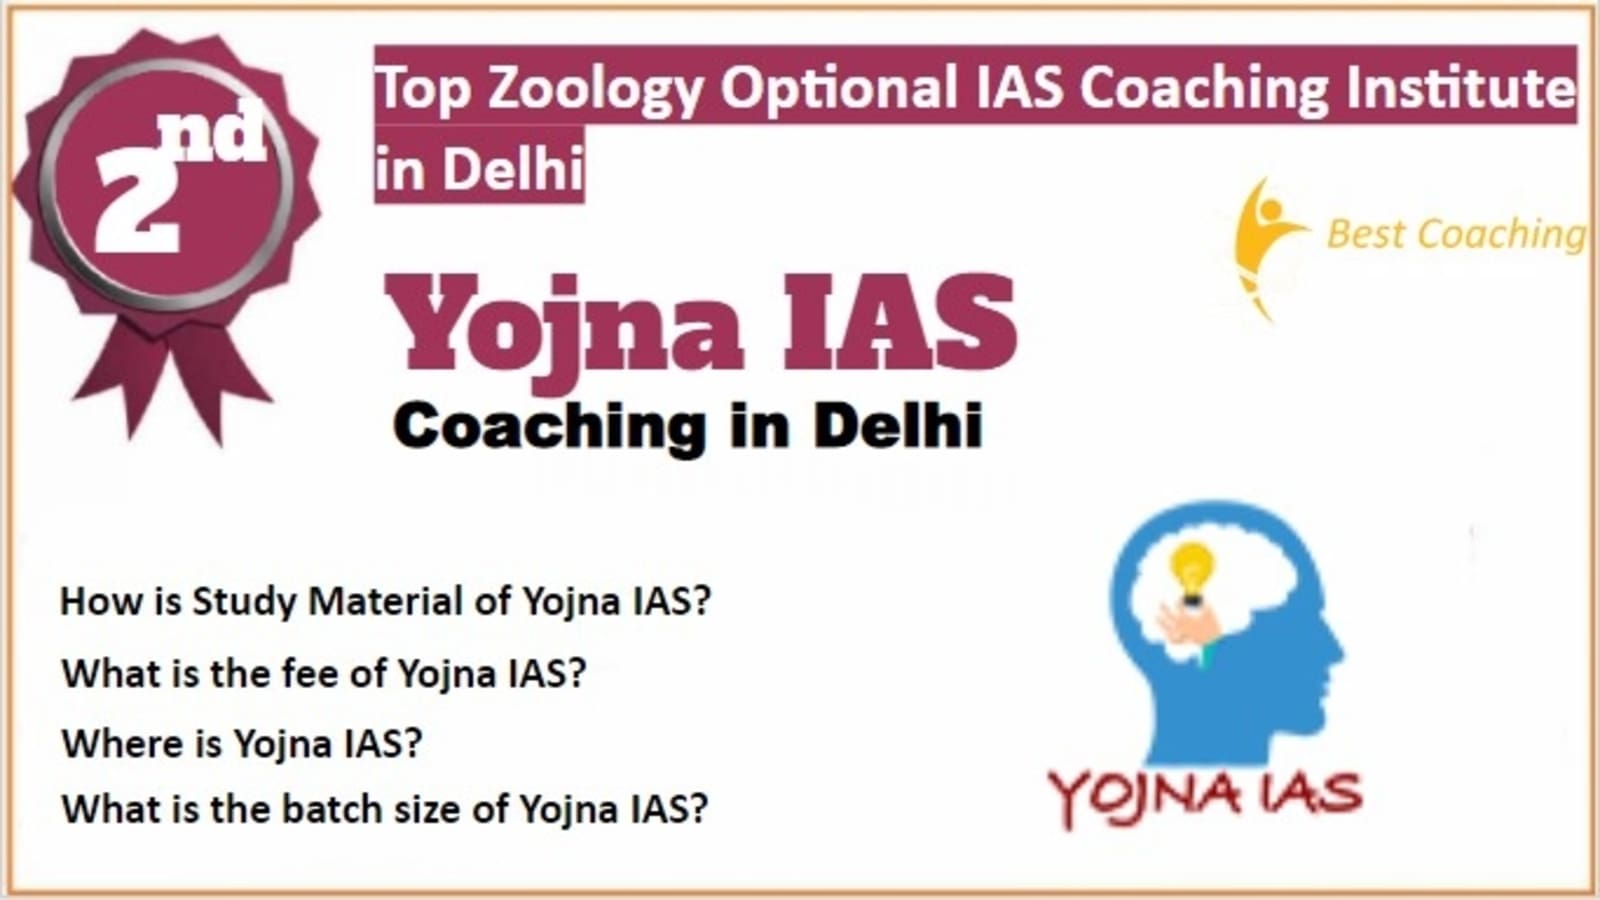 Rank 2 Best Zoology Optional IAS Coaching in Delhi